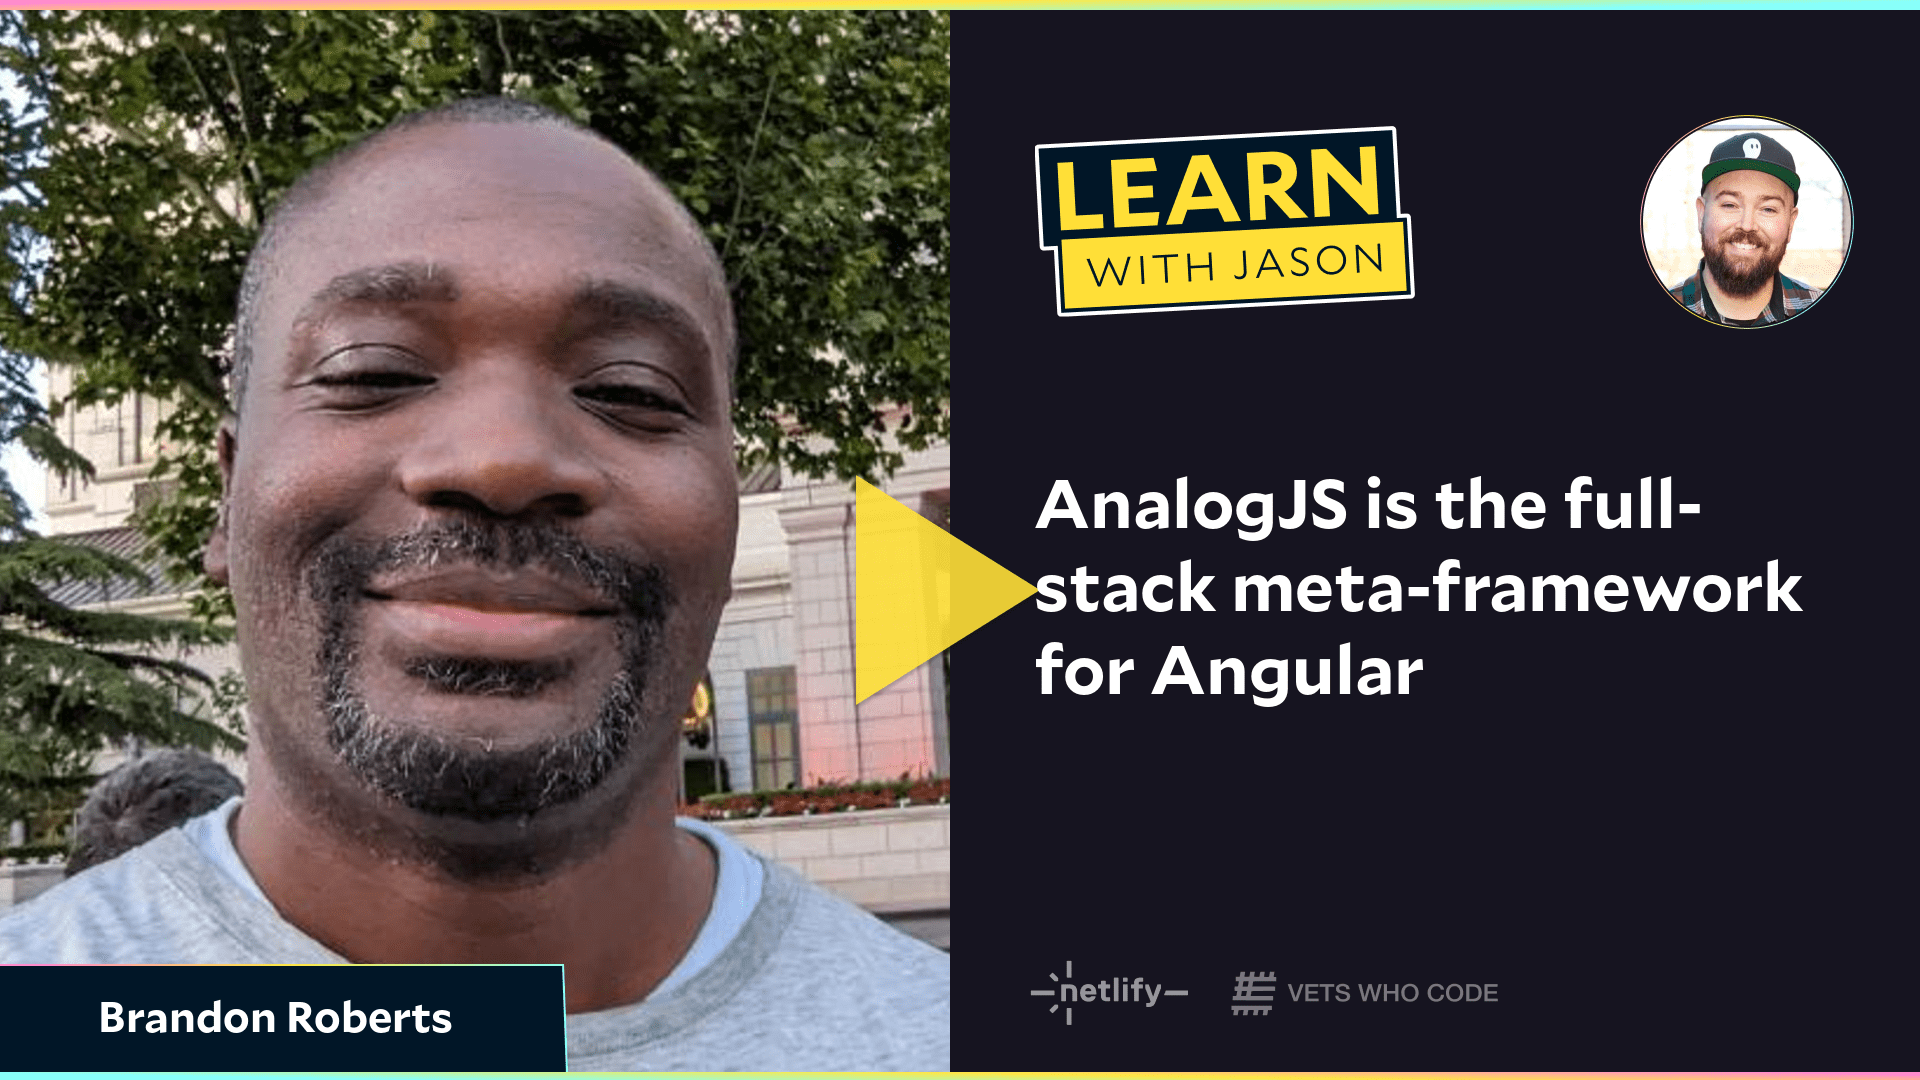 AnalogJS is the full-stack meta-framework for Angular (with Brandon Roberts)